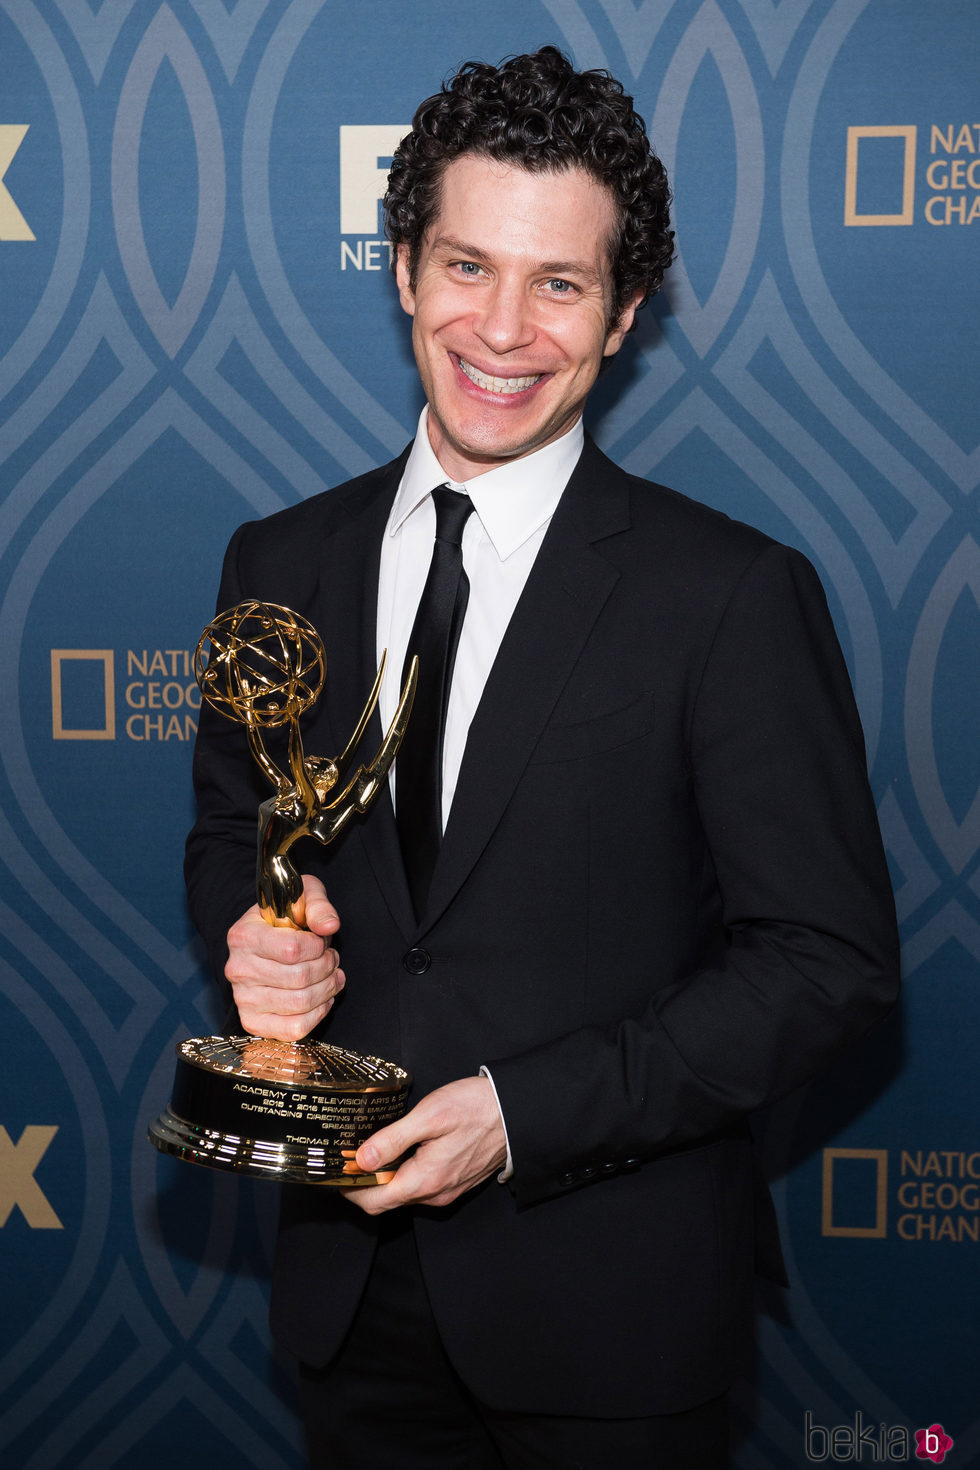 Thomas Kail durante la fiesta celebrada tras los Premios Emmy 2016